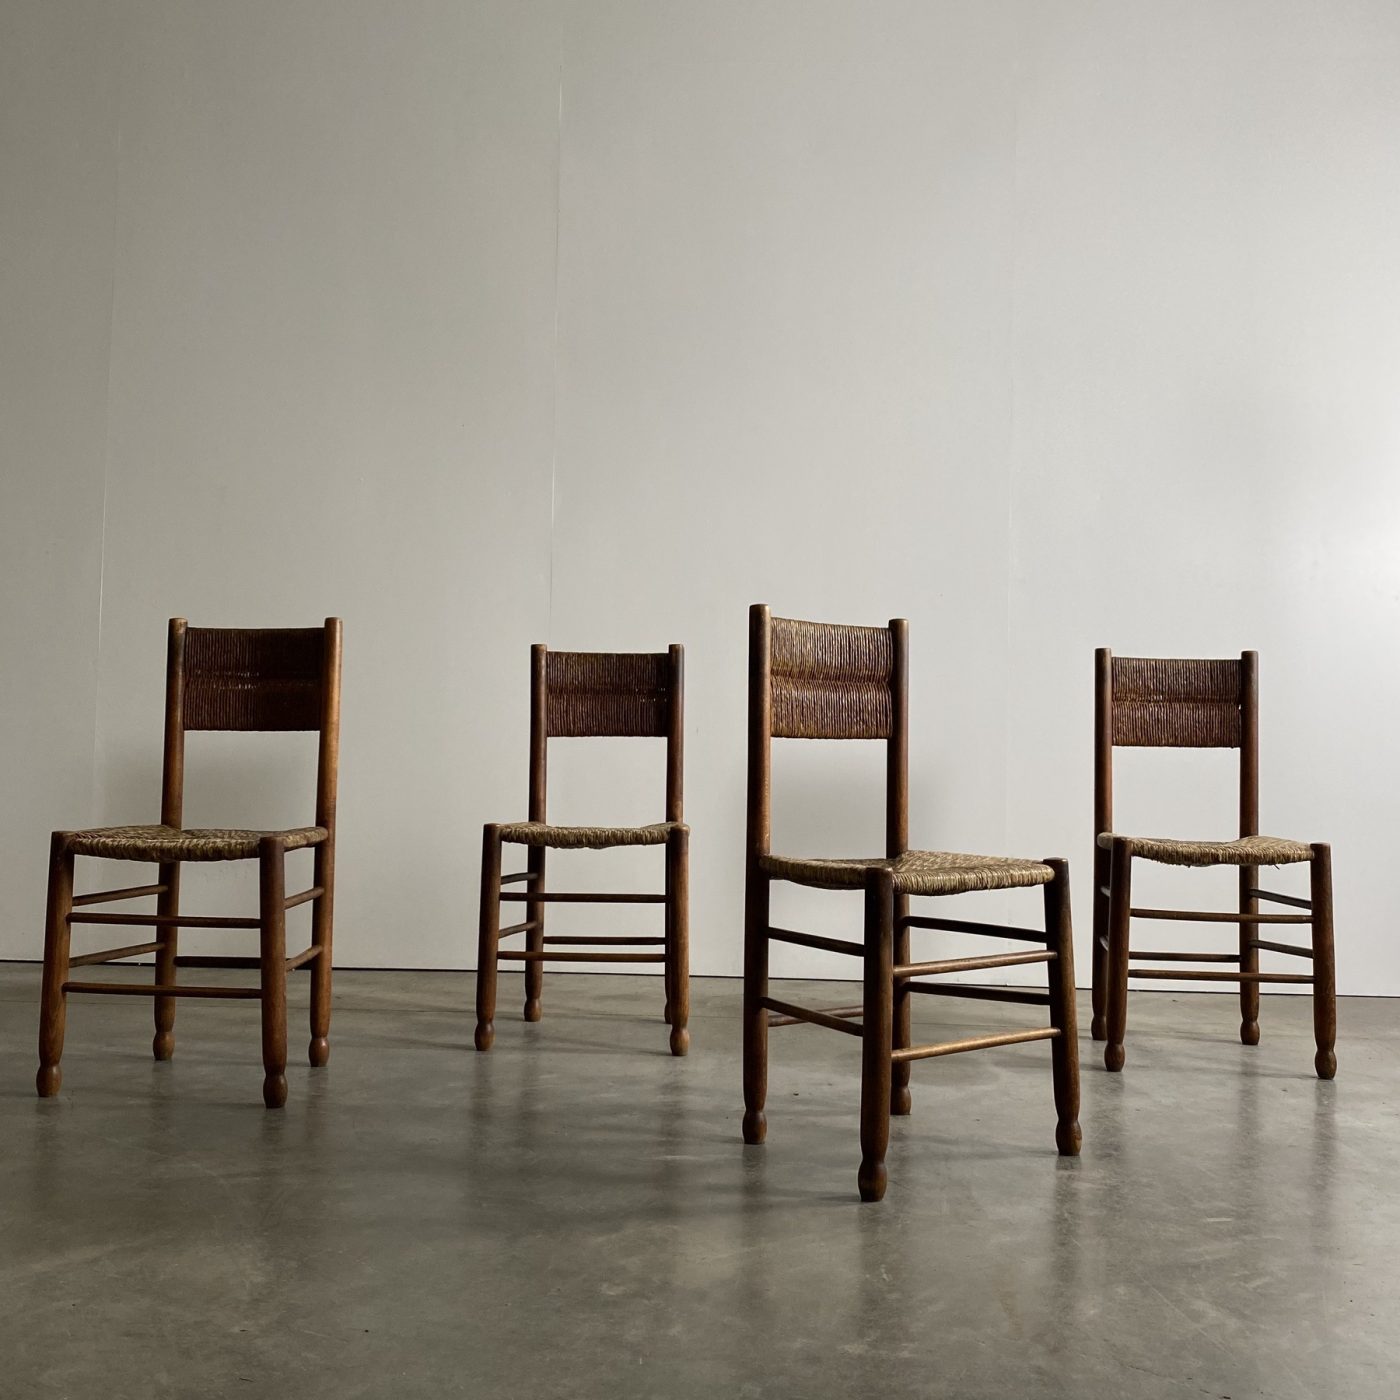 objet-vagabond-rustic-chairs0003